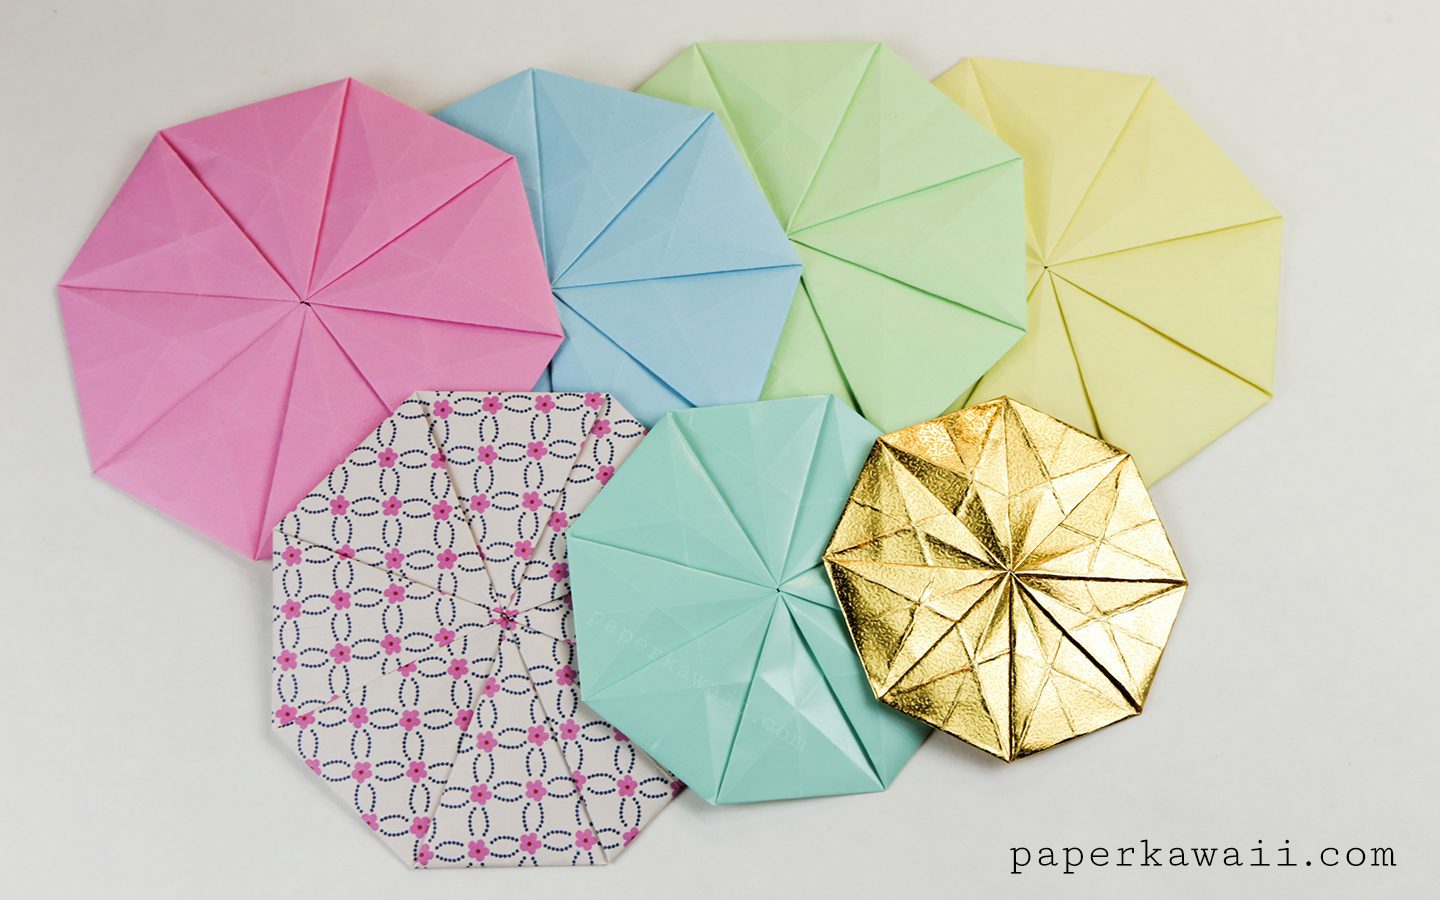 Use an Origami Octagonal Tato as a Coaster!